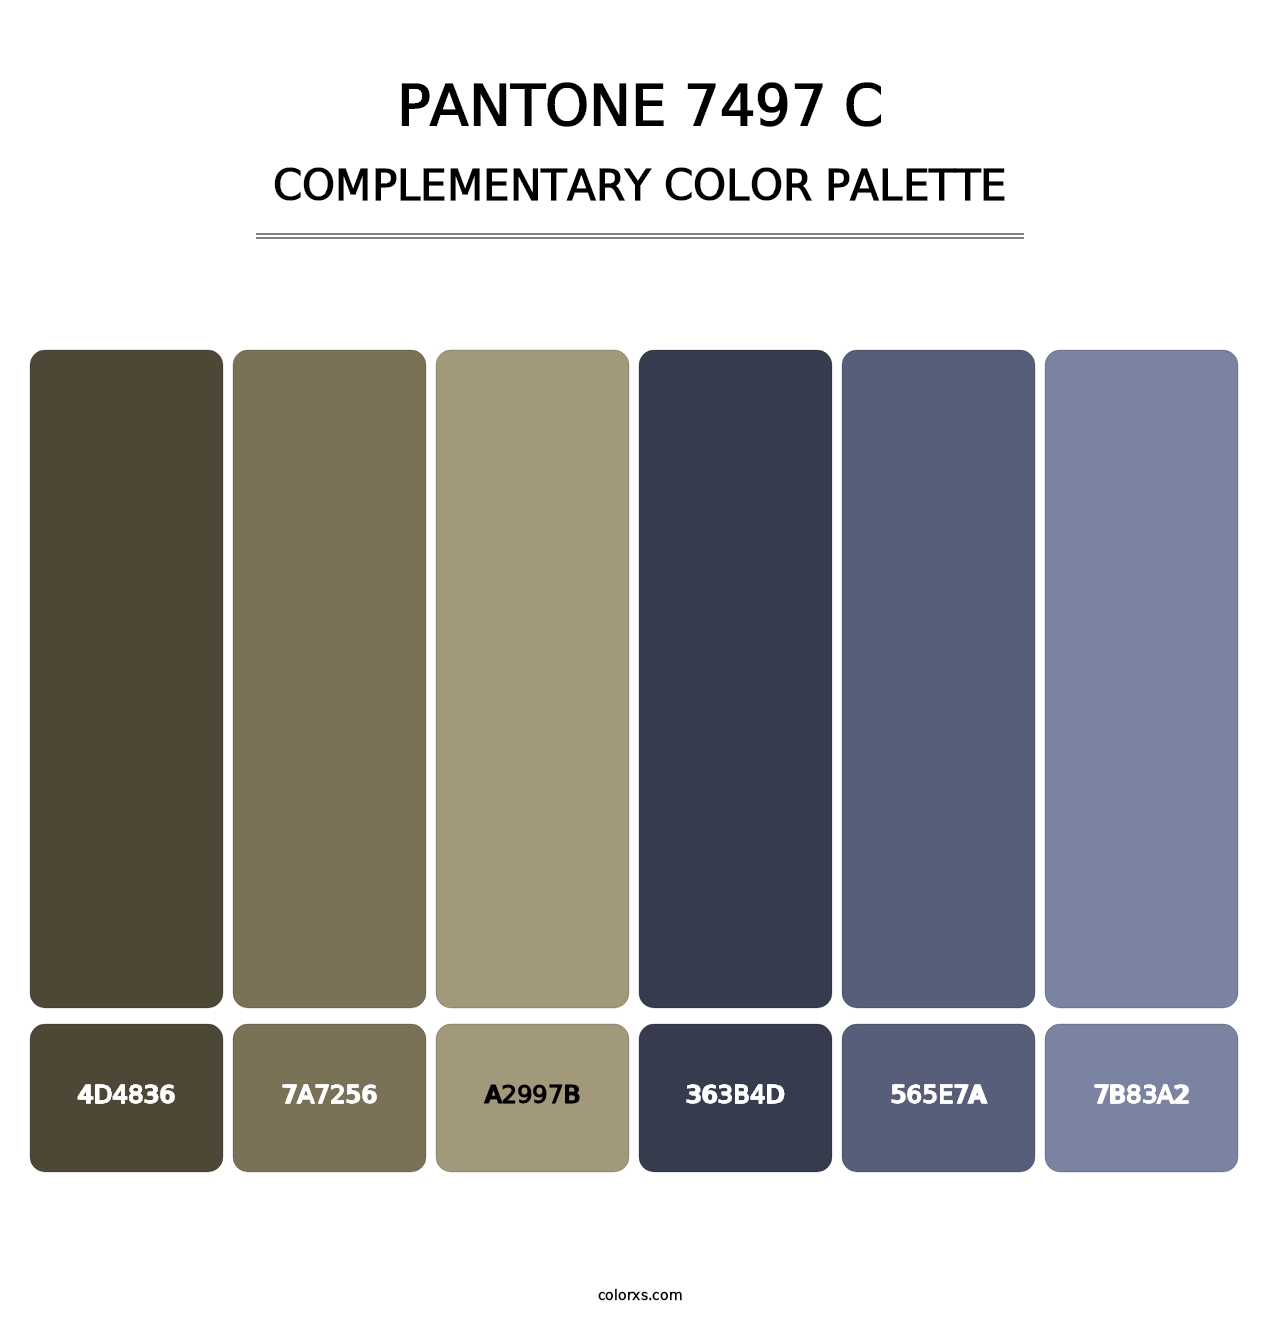 PANTONE 7497 C - Complementary Color Palette